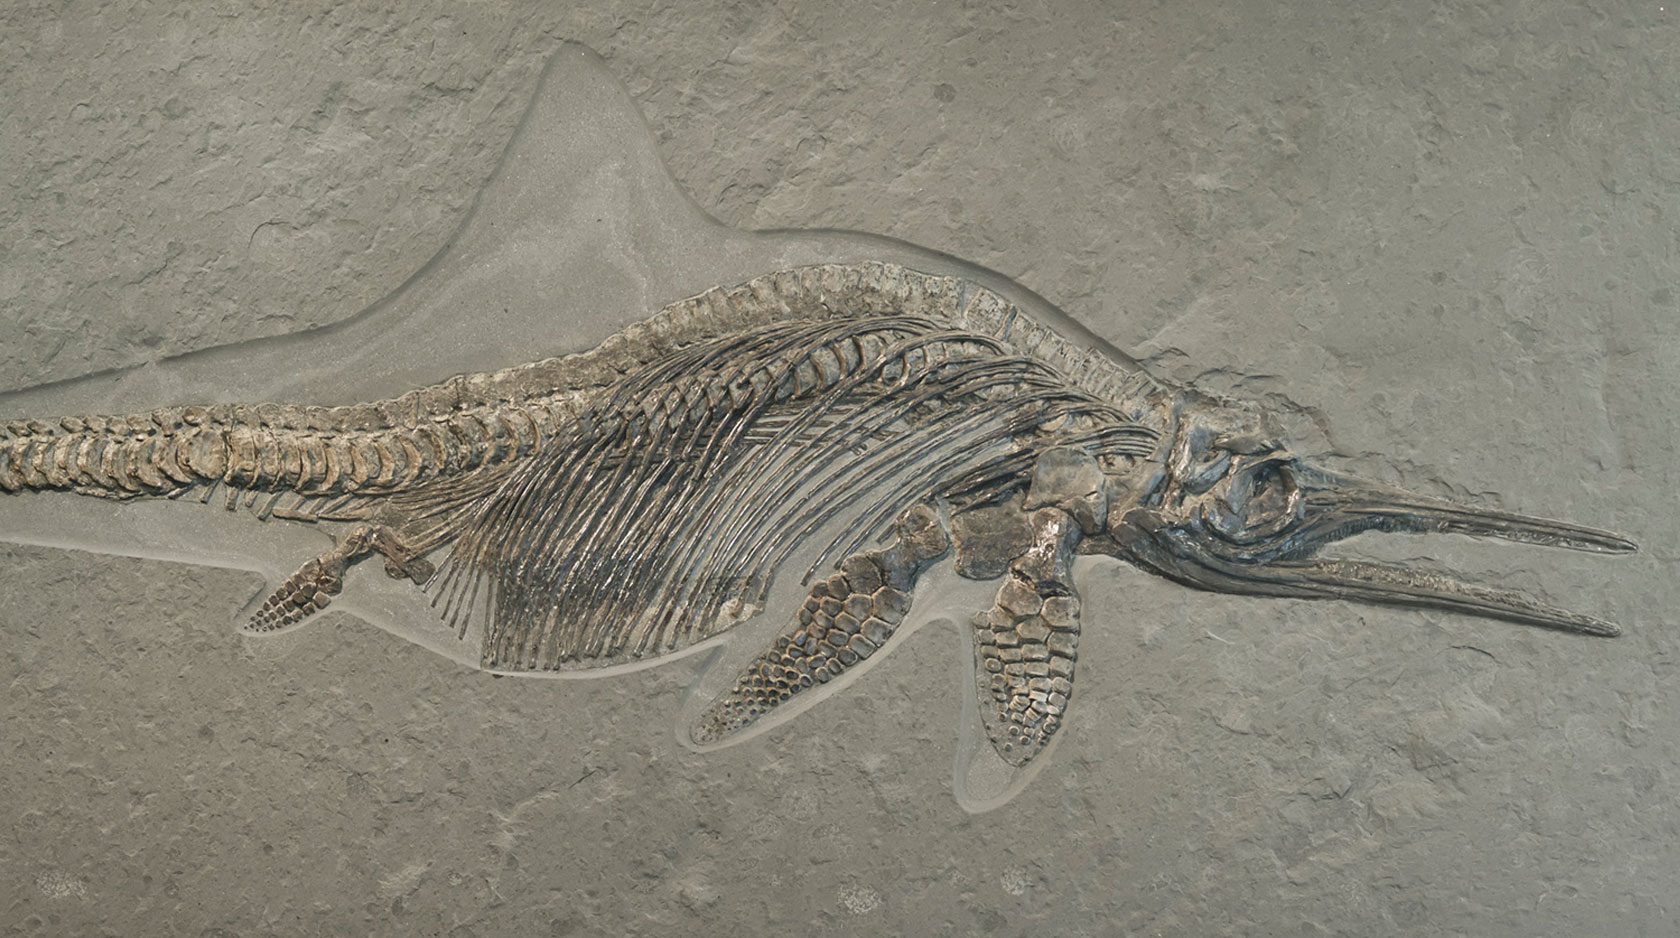 Fischsaurier (Stenopterygius quadriscissus), Jura (Lias Epsilon / Unteres Toarcium), ca. 180 Millionen Jahre, Holzmaden, Deutschland, Foto: Axel Killian